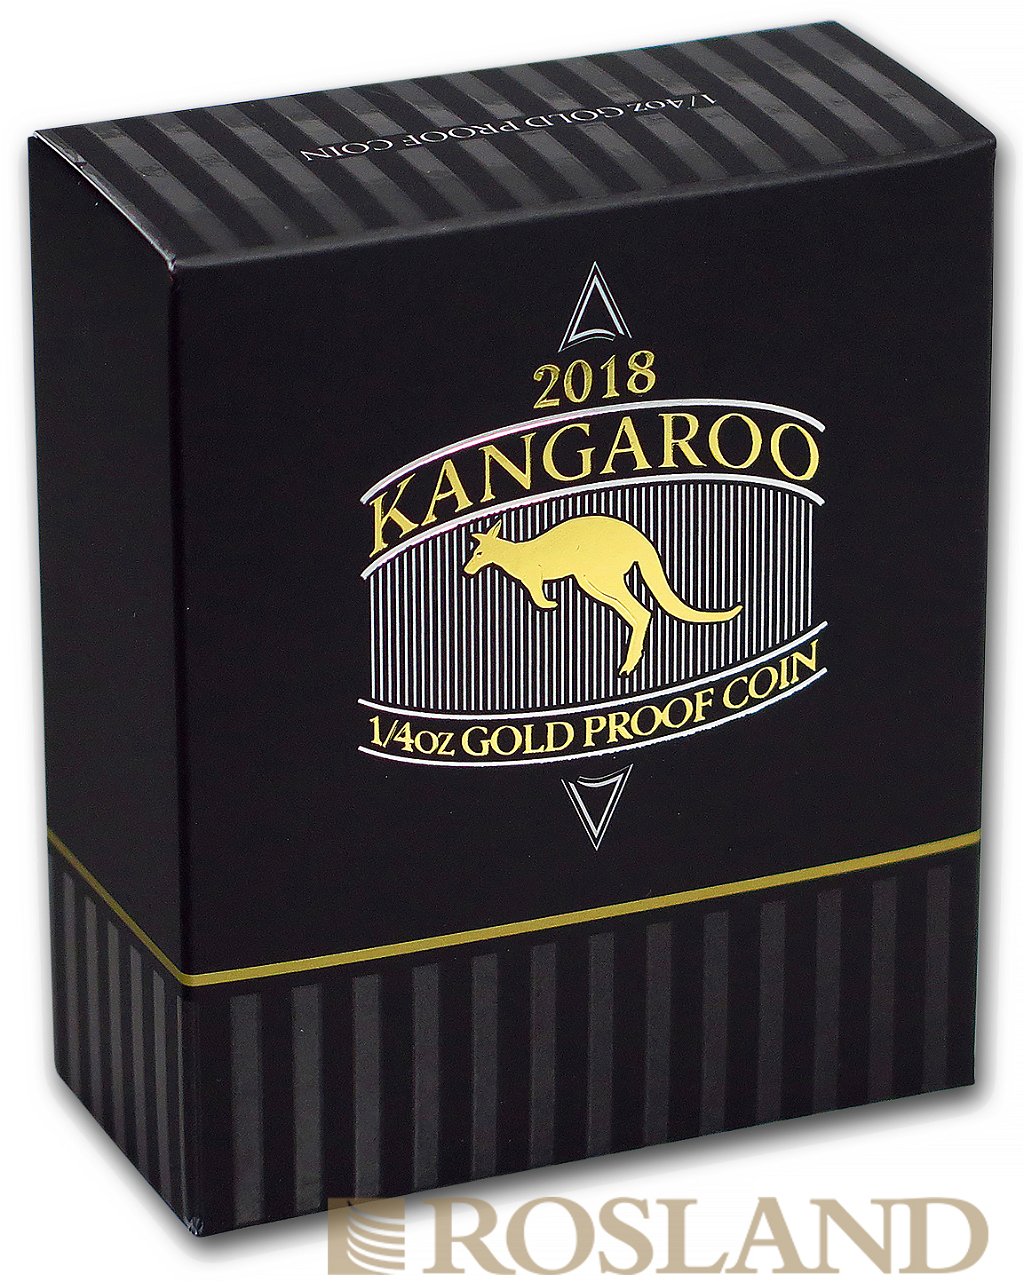 1/4 Unze Goldmünze Australien Känguru 2018 PP (Box, Zertifikat)